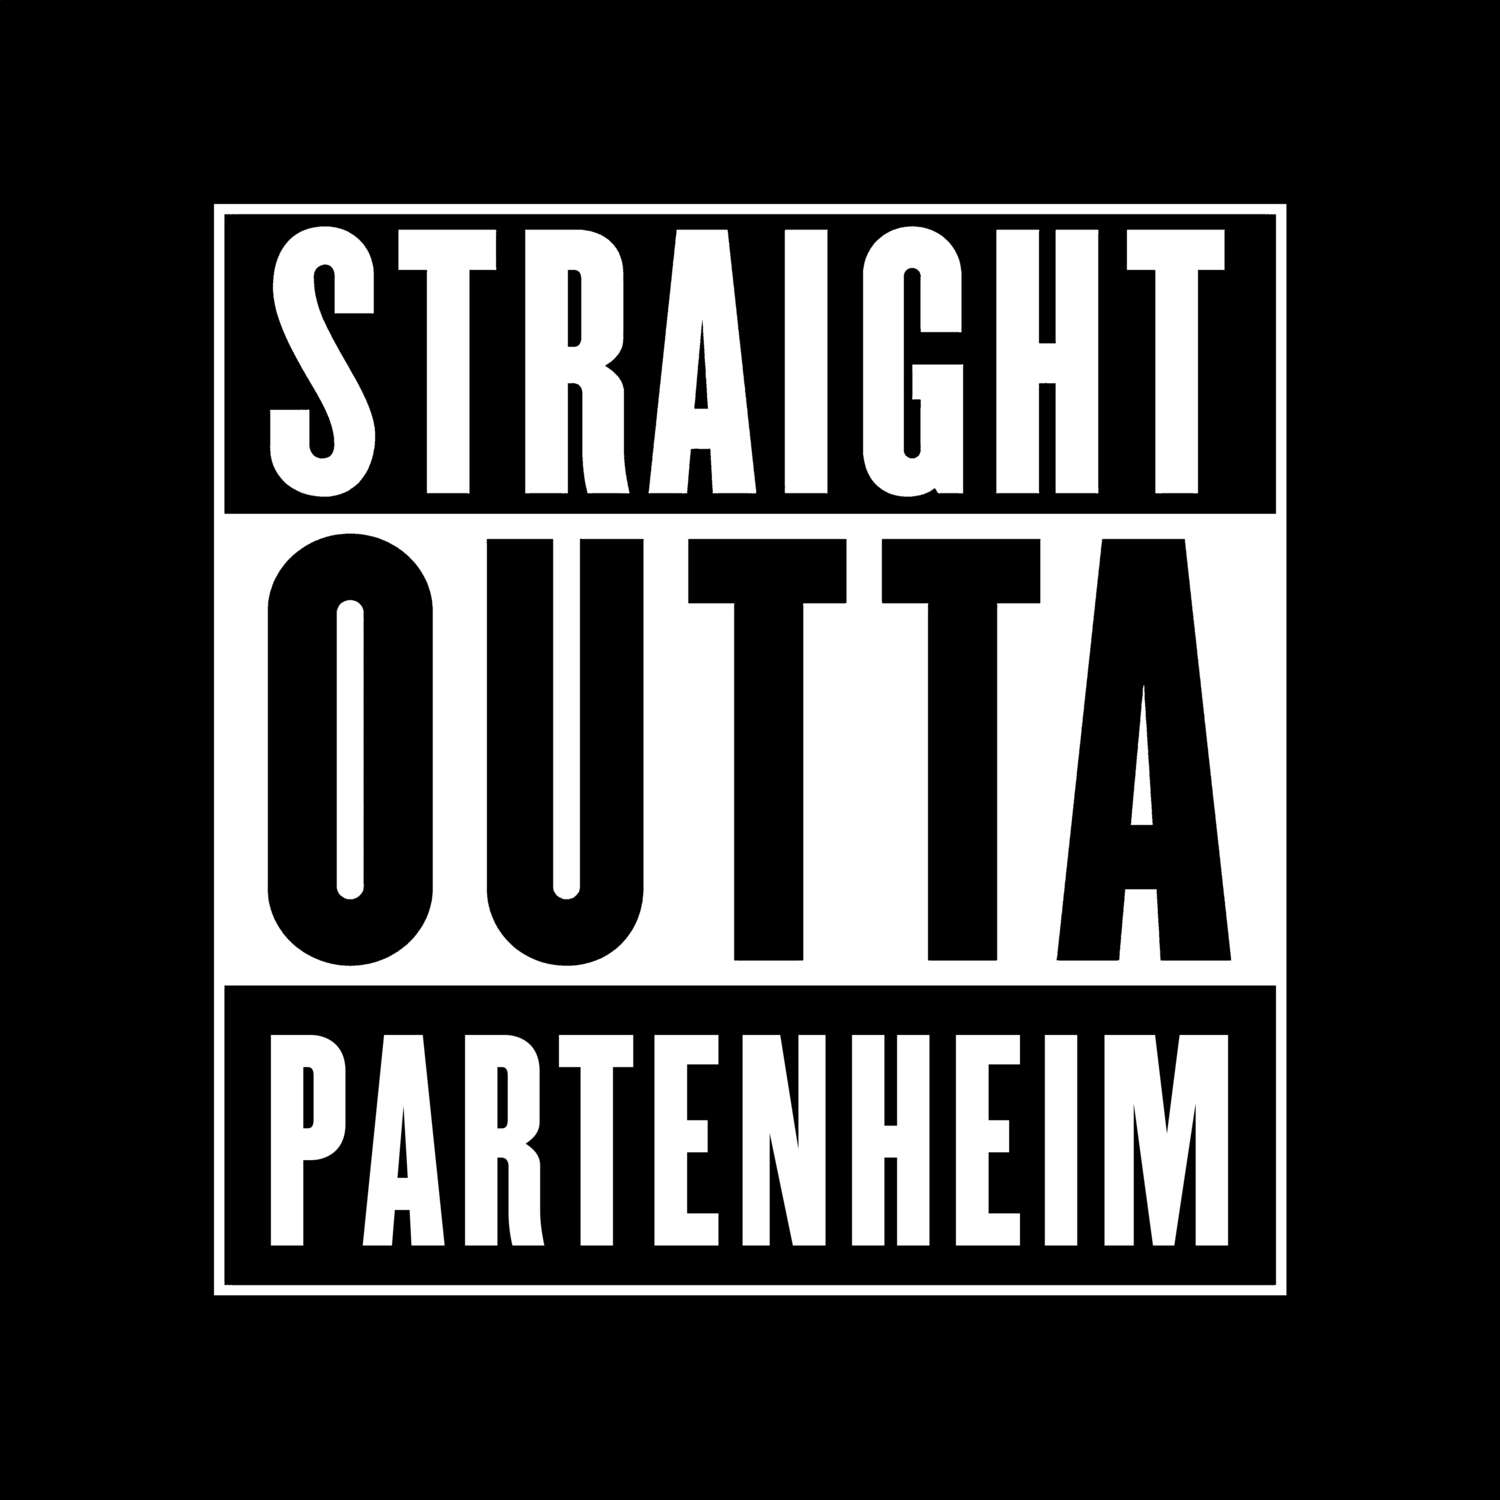 Partenheim T-Shirt »Straight Outta«